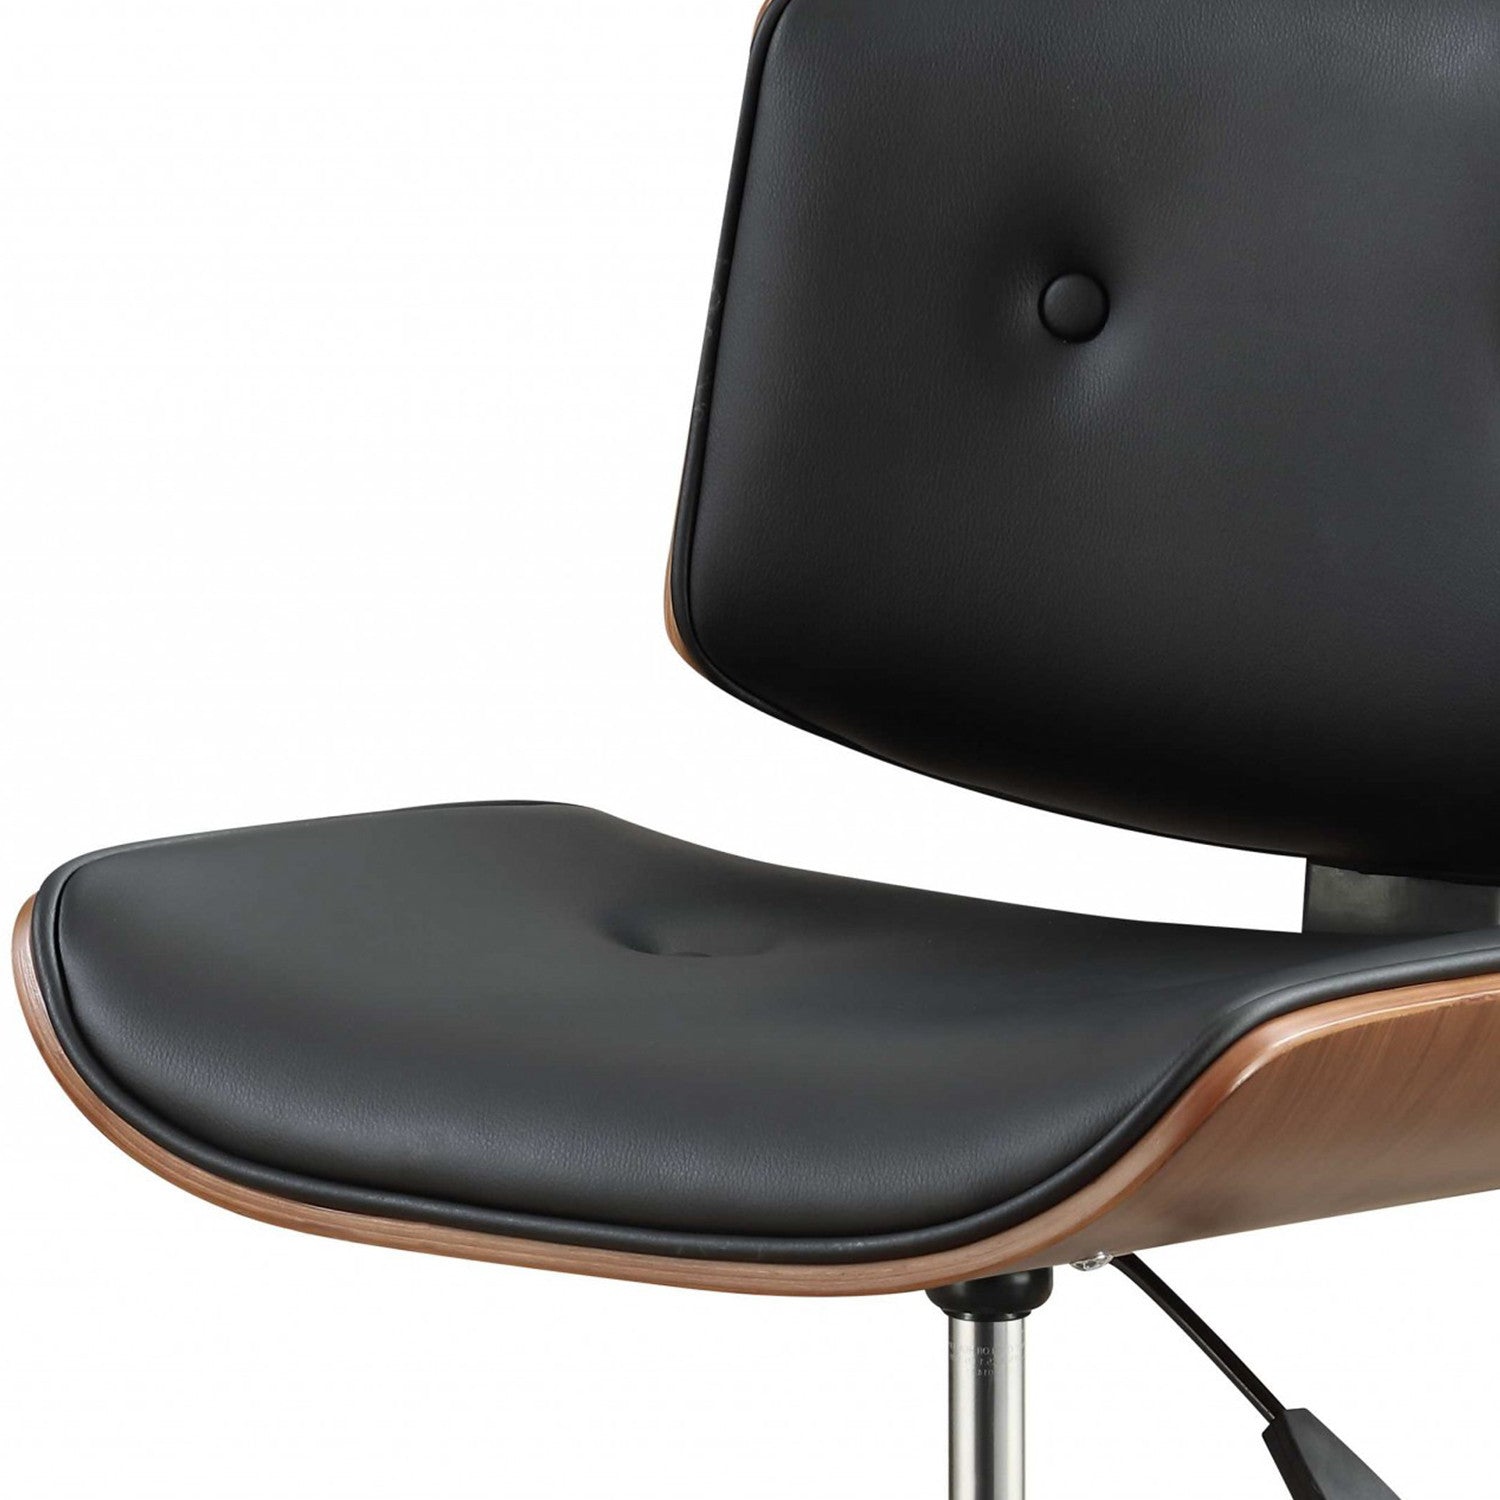 20' X 22' X 31' Black And Walnut Office Chair